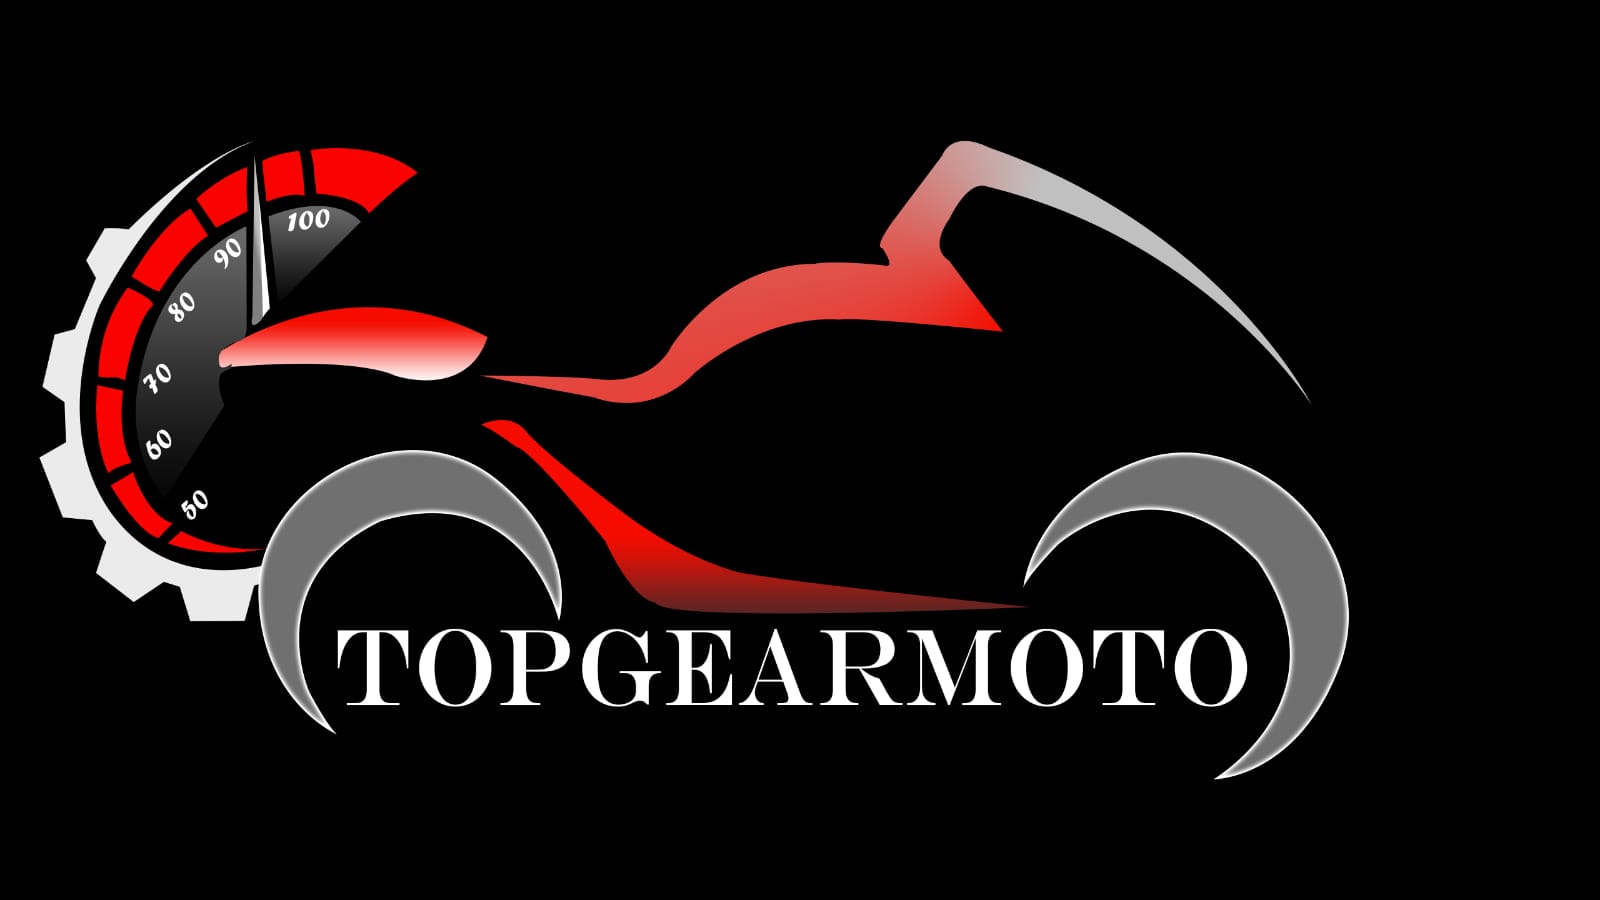 Top Gear Moto